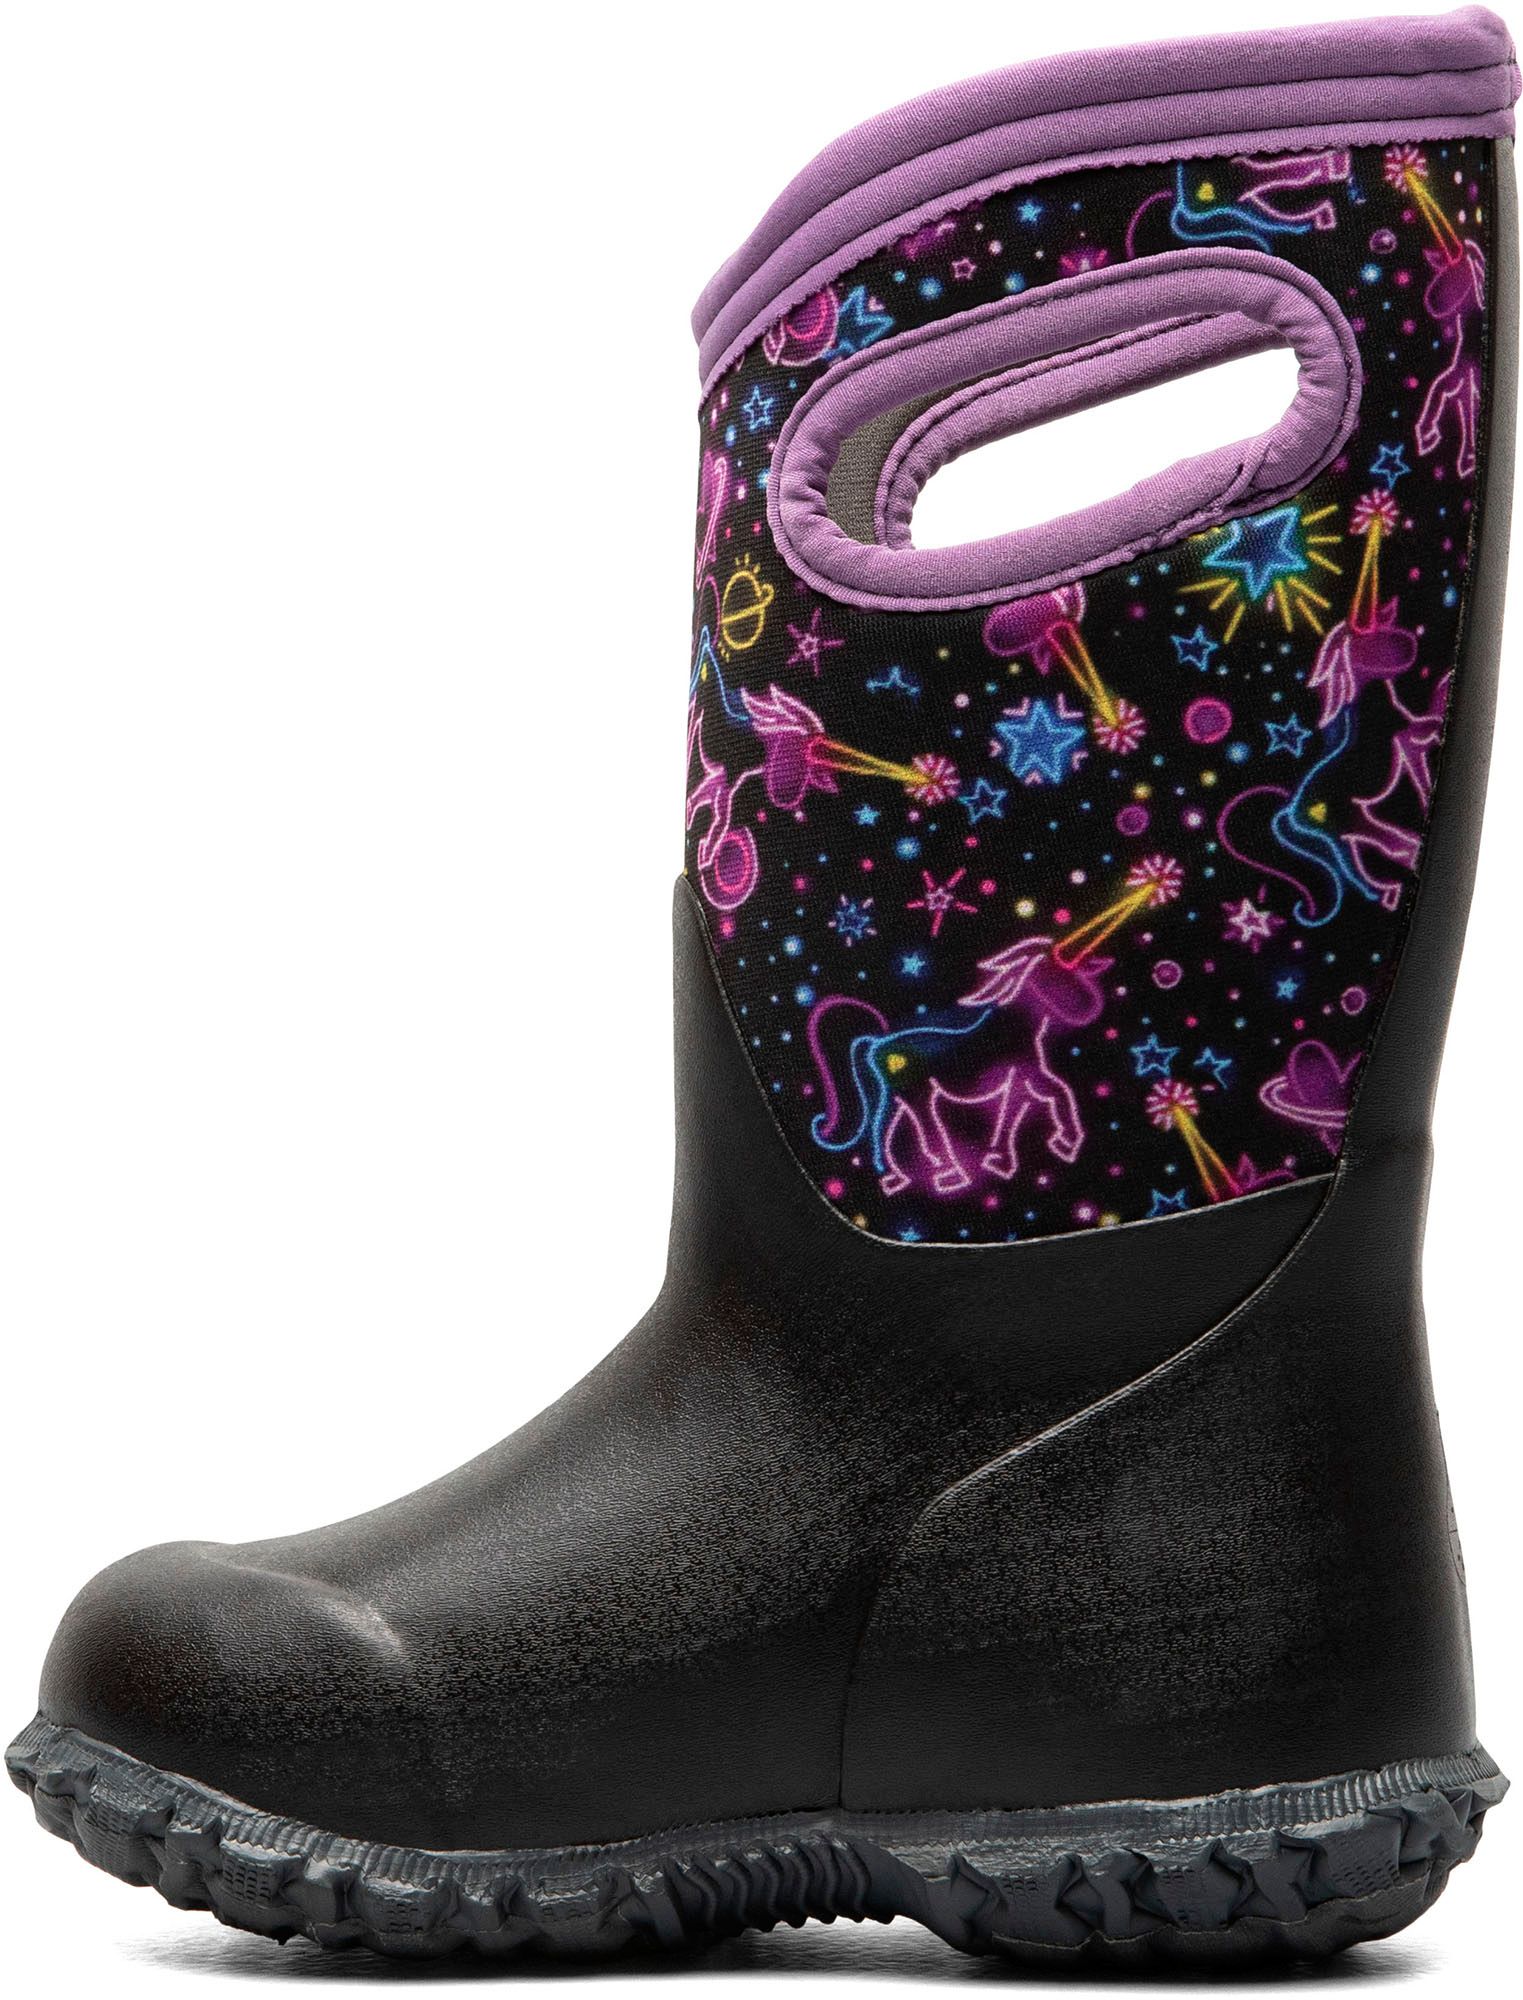 Bogs Kids' York Camo Dino Waterproof Winter Boots